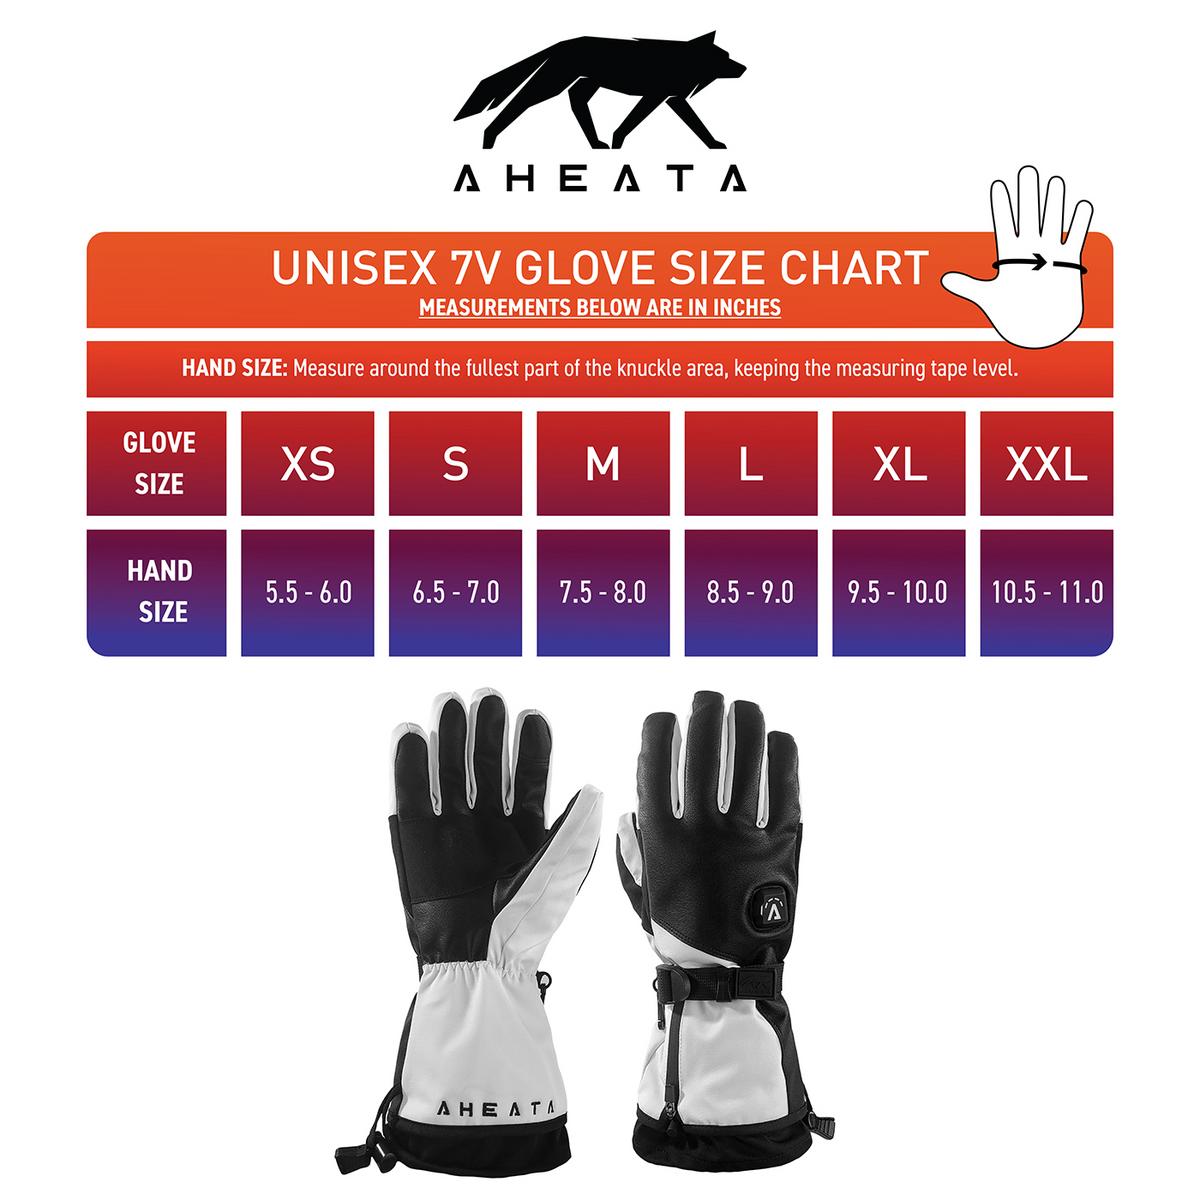 Aheata 7V Battery Heated Gloves - Unisex